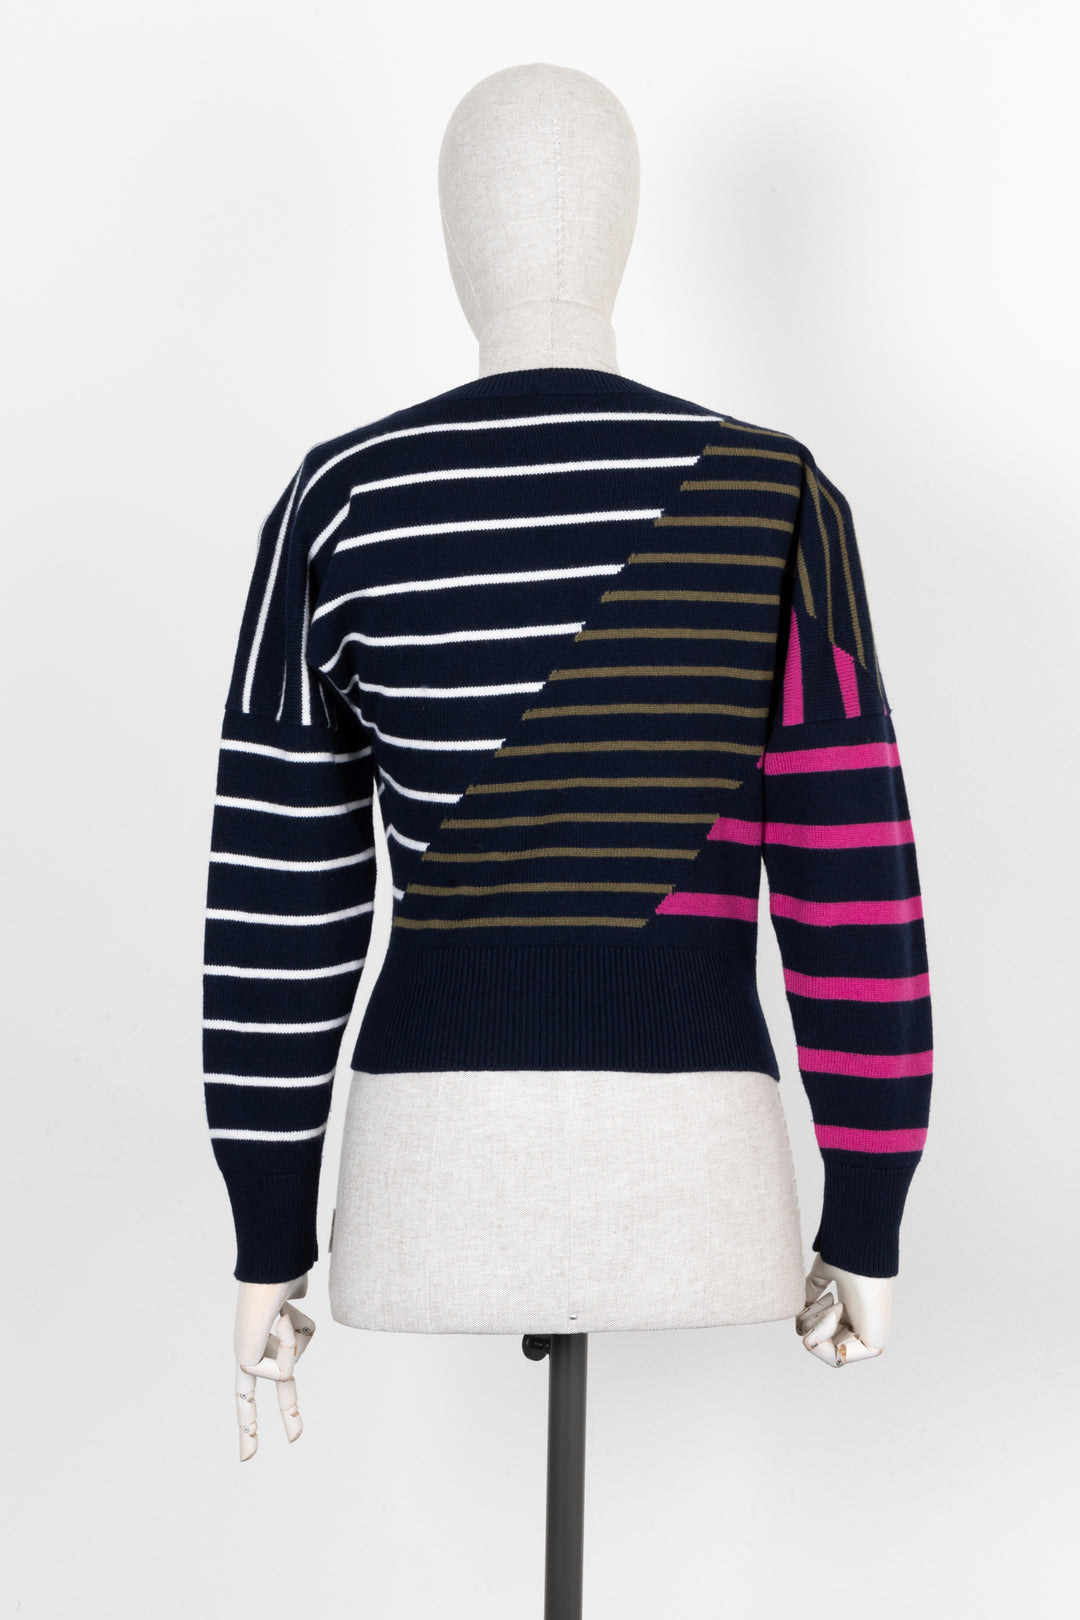 CHANEL Knit CC Cashmere Striped Navy